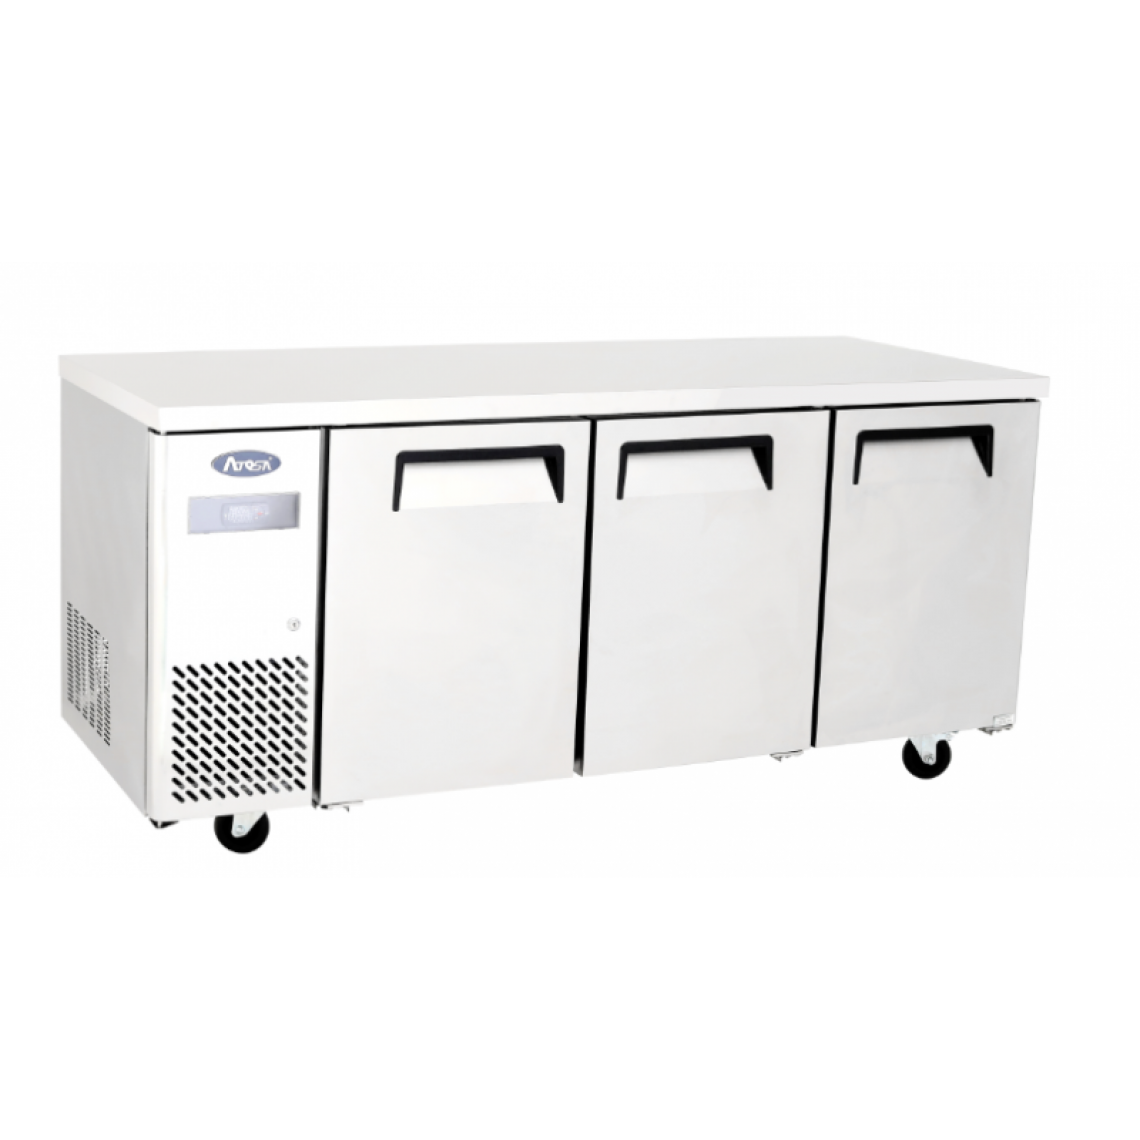 Atosa - Table Réfrigérée Positive 3 Portes - 470 Litres - Atosa - R600aAcier inoxydable3 PortesPleine - Réfrigérateur américain